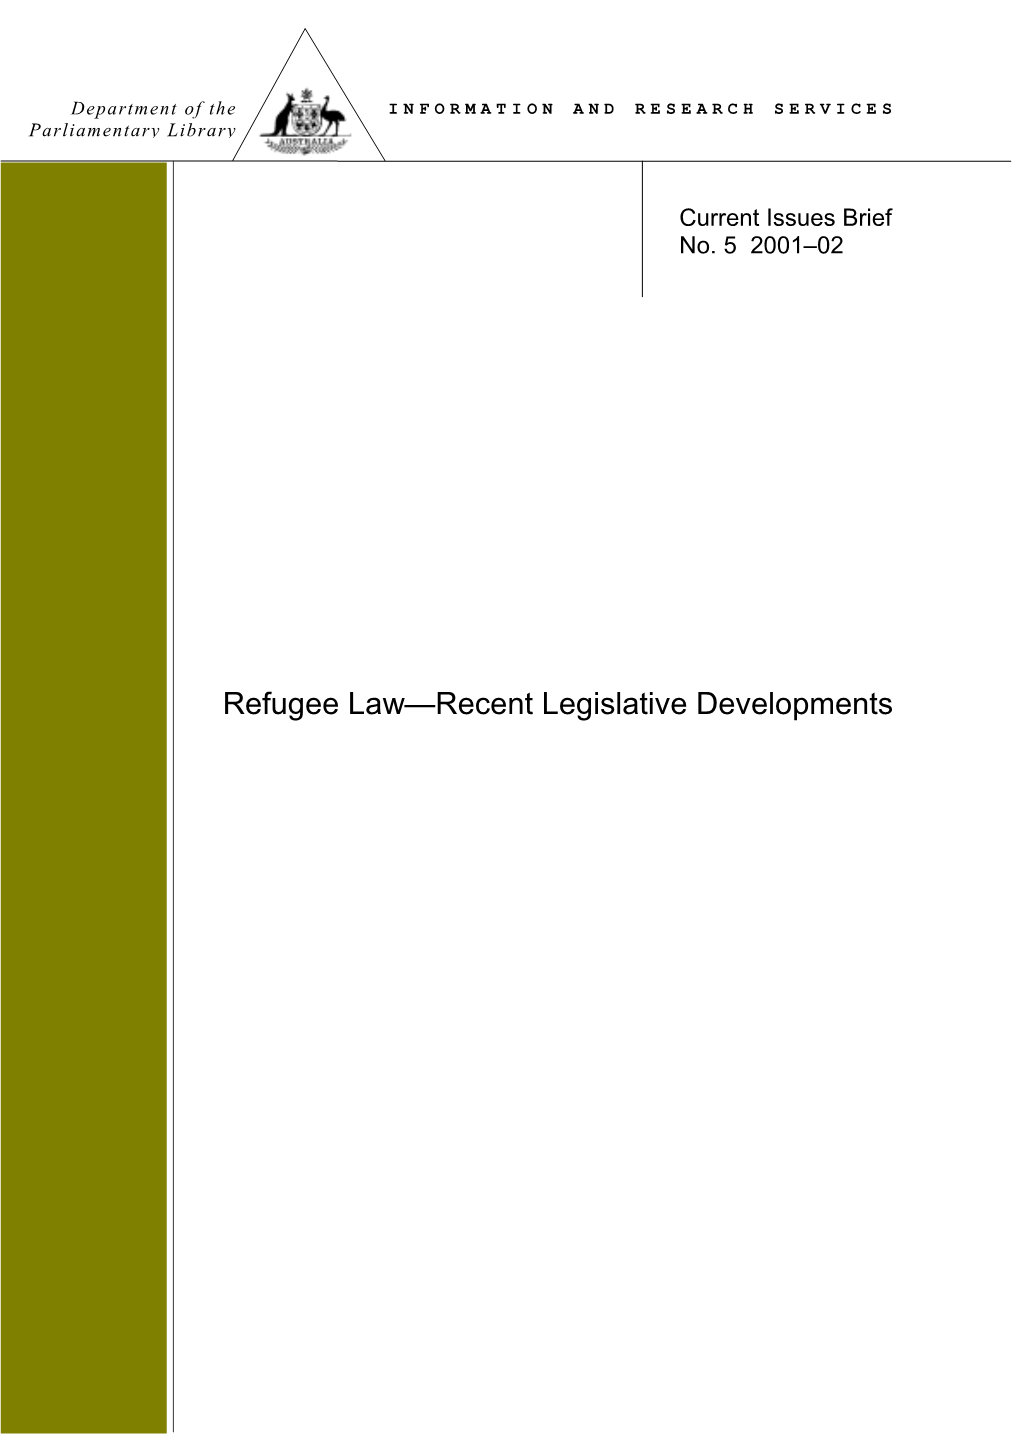 Refugee Law-Recent Legislative Developments